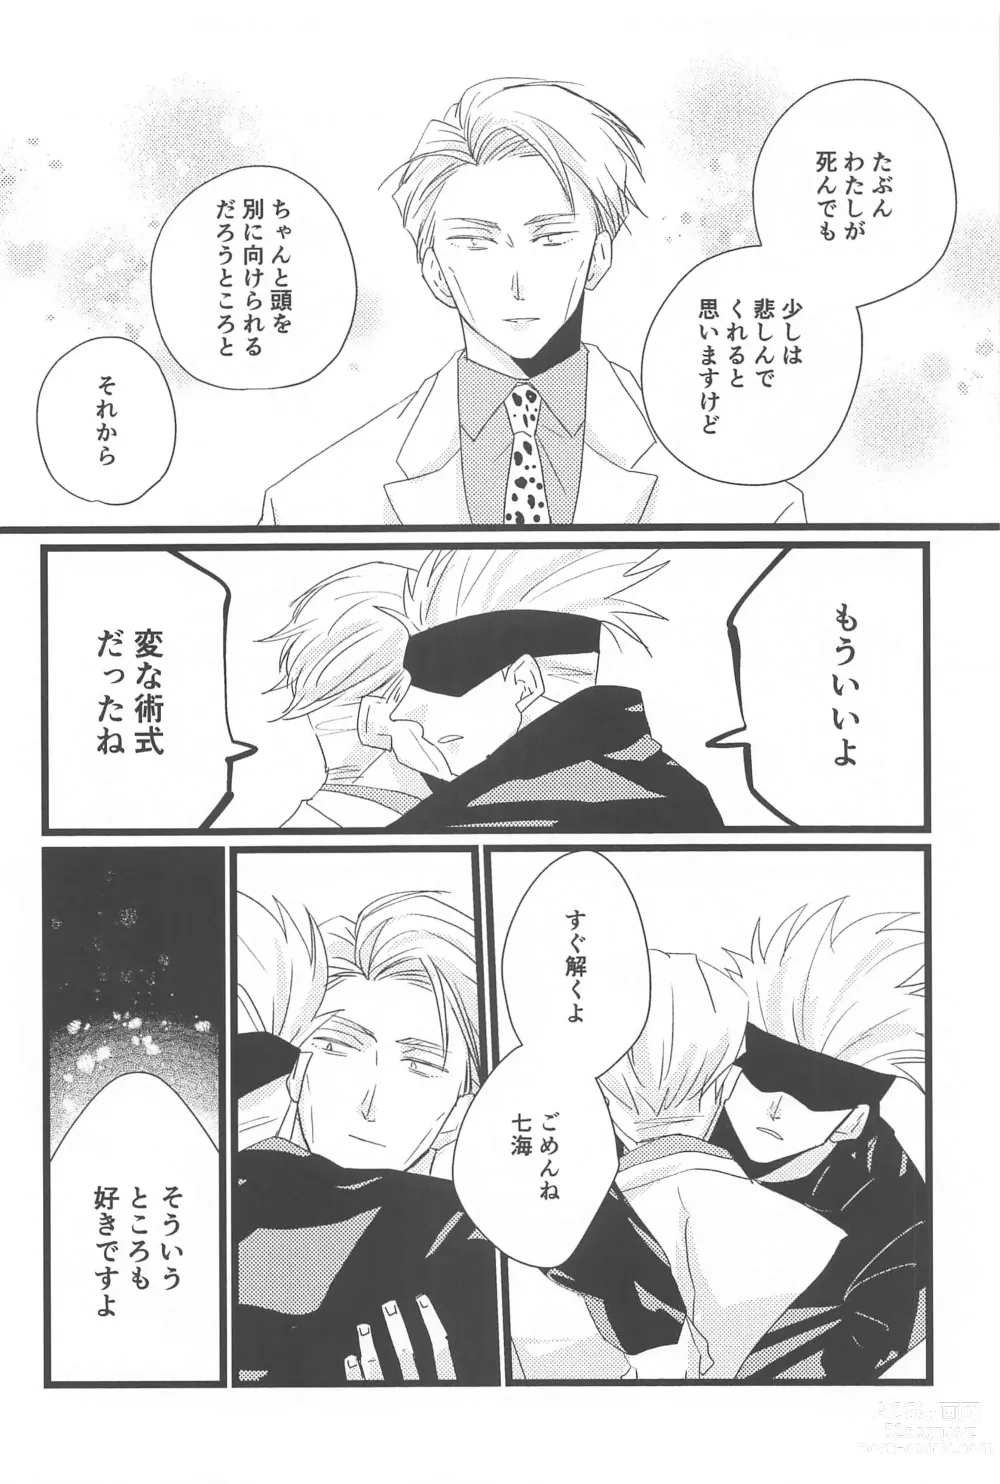 Page 11 of doujinshi timeless memory 2